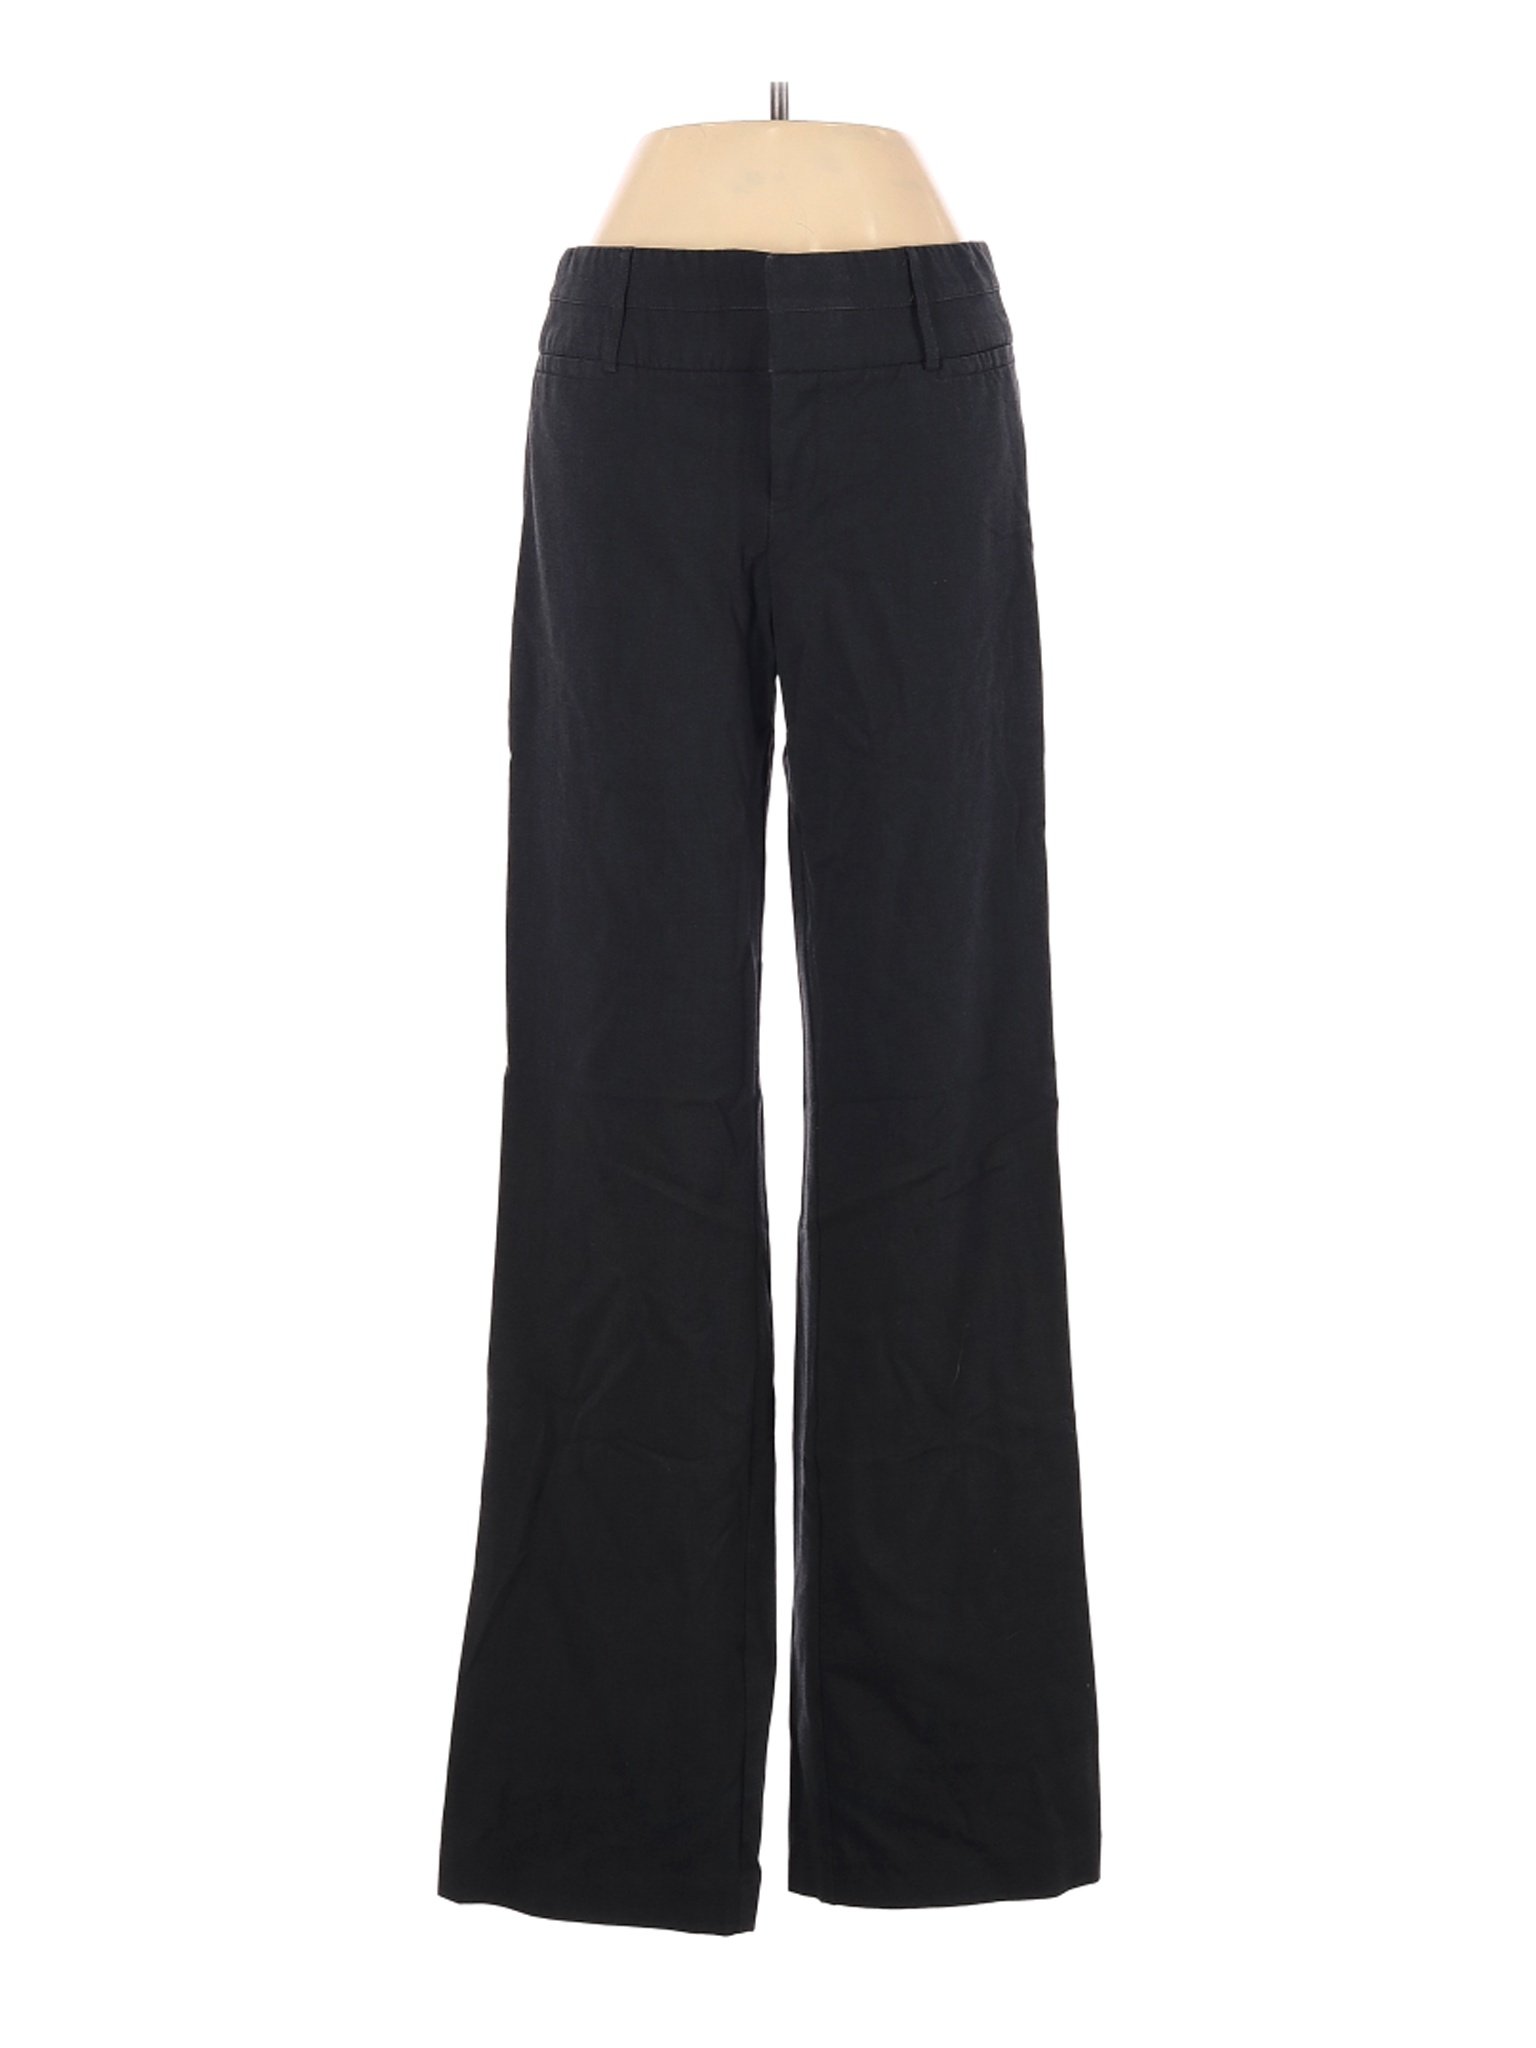 AB Studio Women Black Dress Pants 2 | eBay